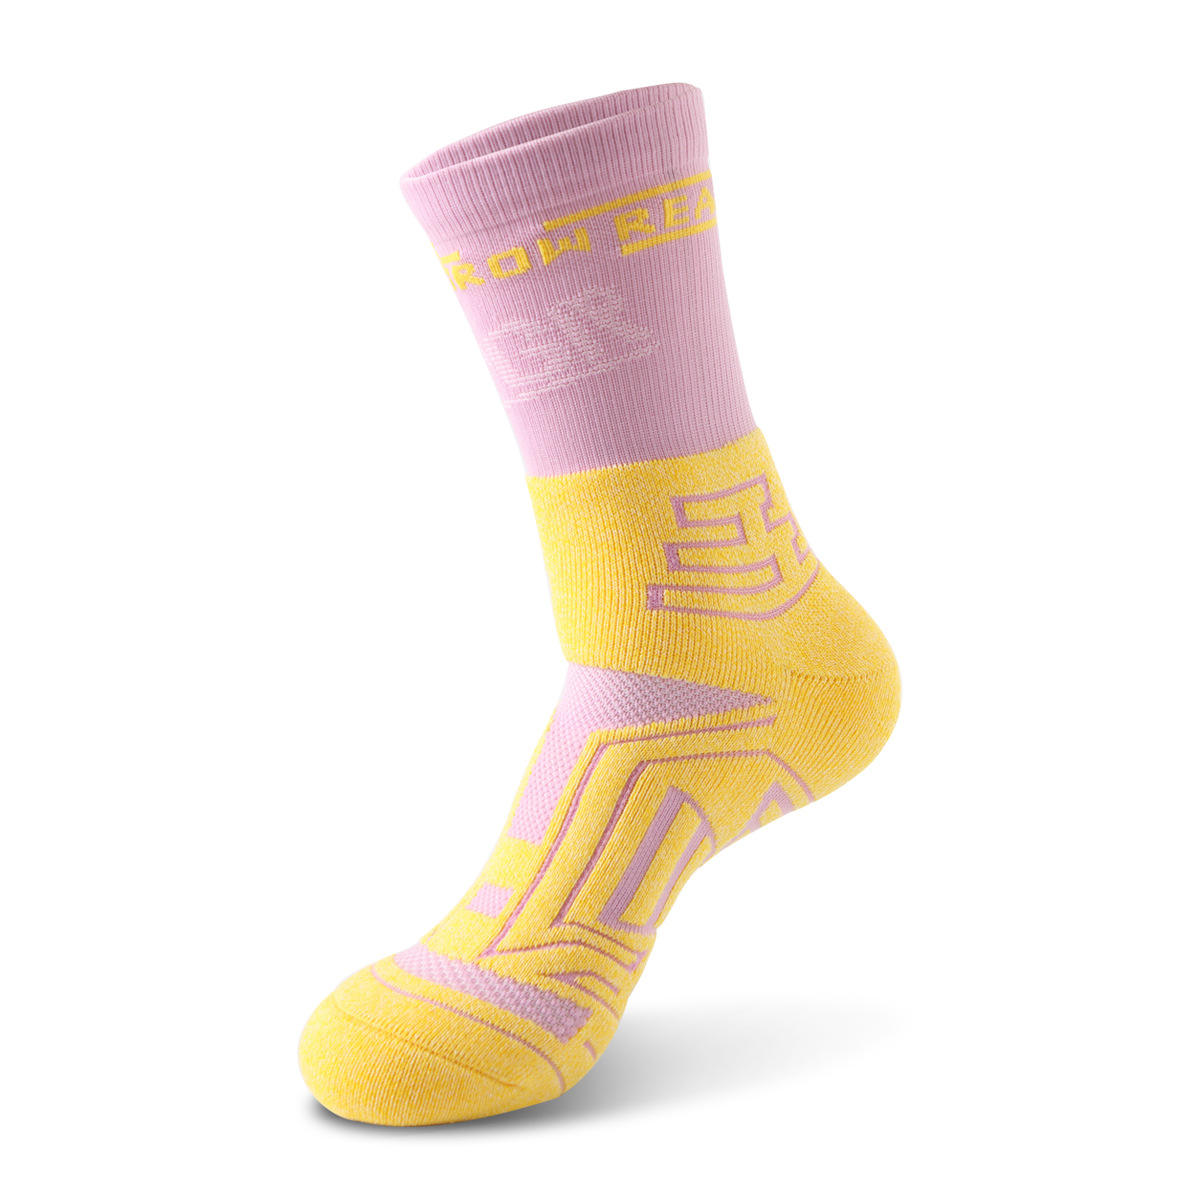 Four Seasons Trend Basketball Socks Tube Socks Towel Bottom Running Hiking Socks Moisture Absorption Sweat